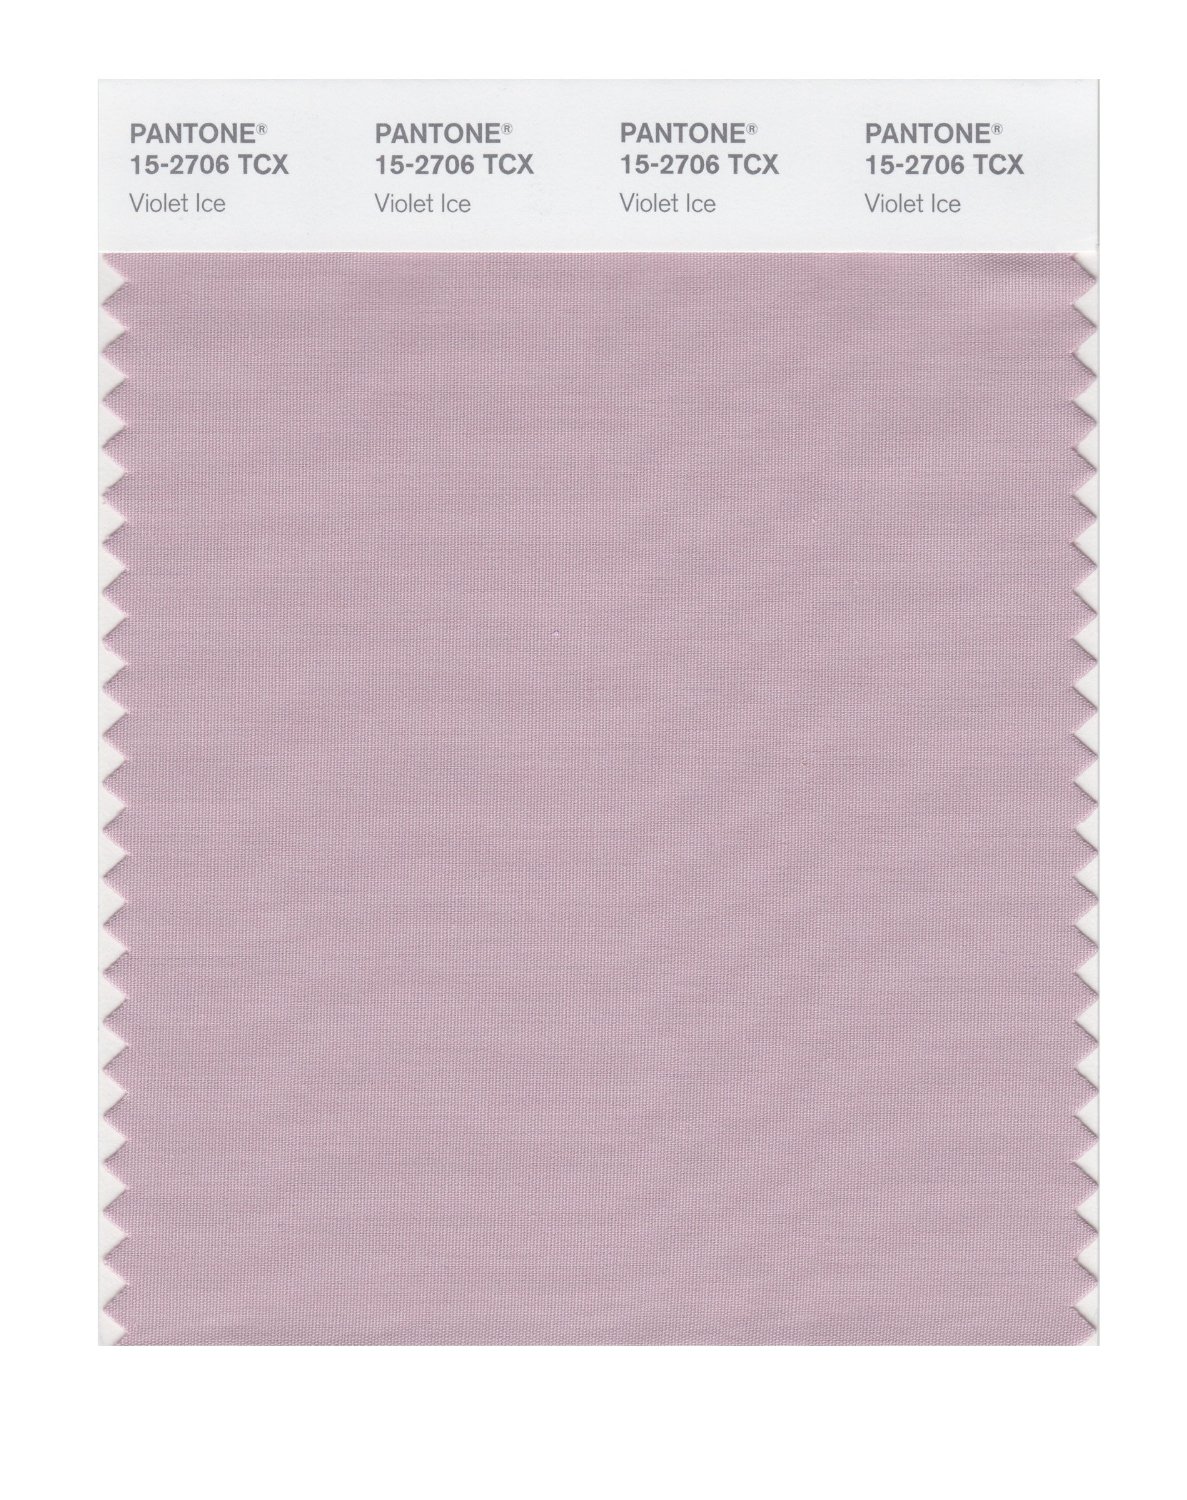 Pantone Cotton Swatch 15-2706 Violet Ice